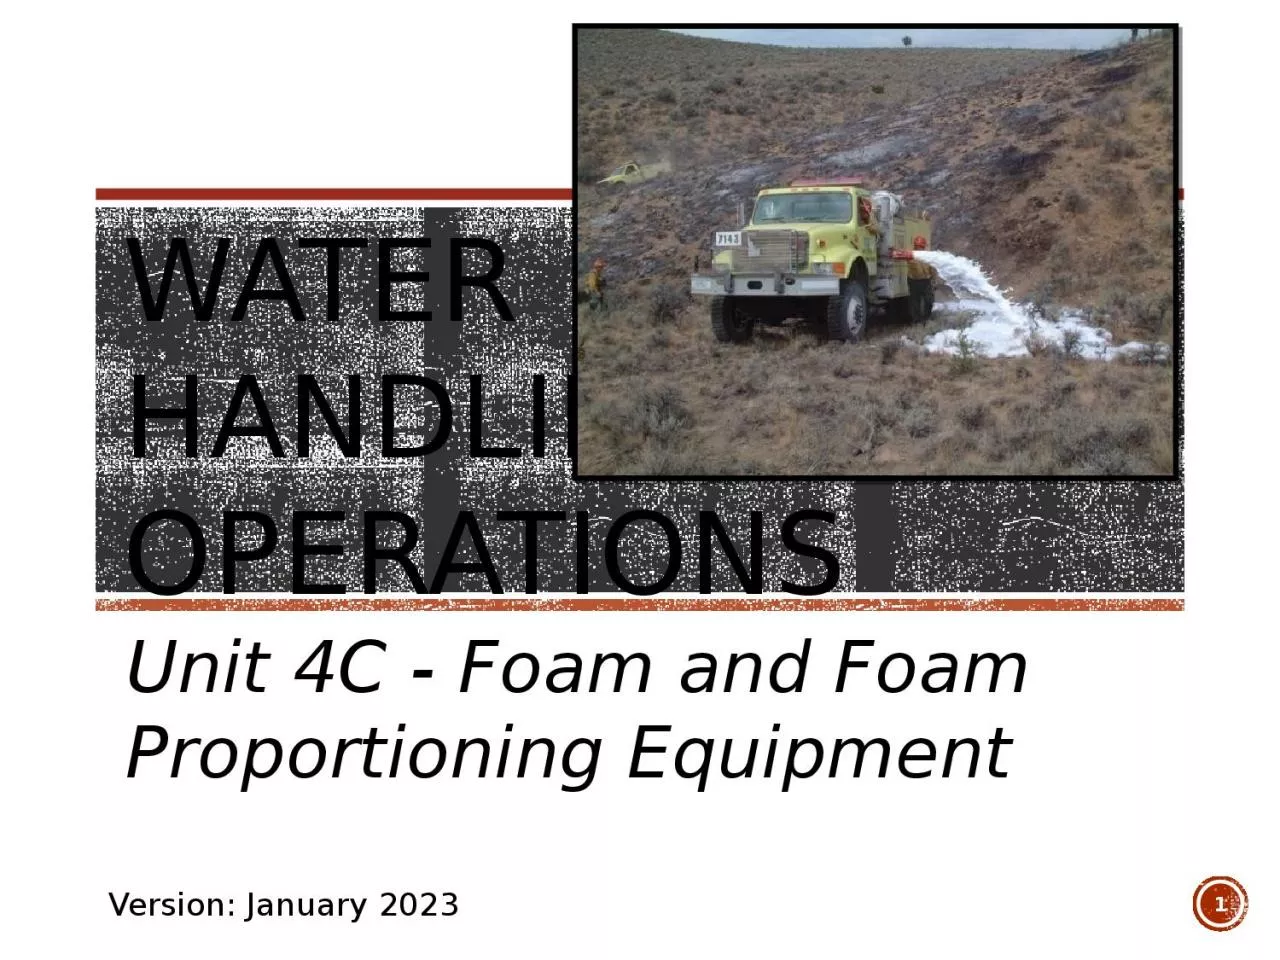 Water  Handling Operations